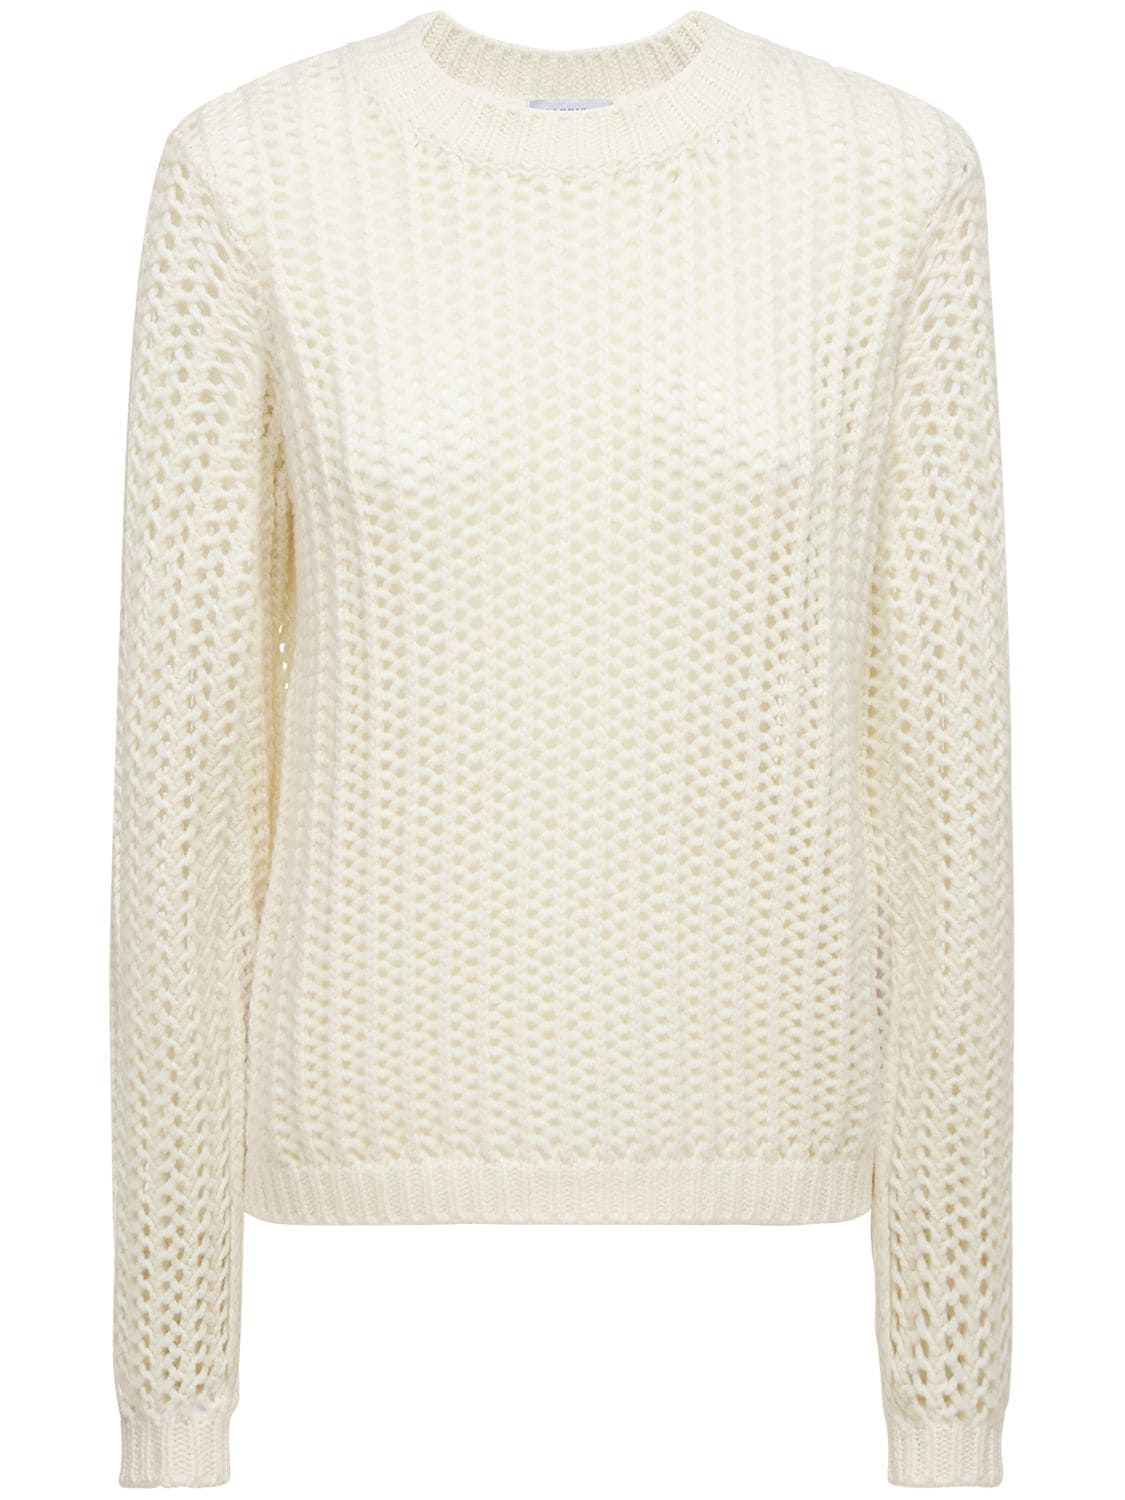 Gabriela Hearst - Cashmere weave knit crewneck sweater - White ...